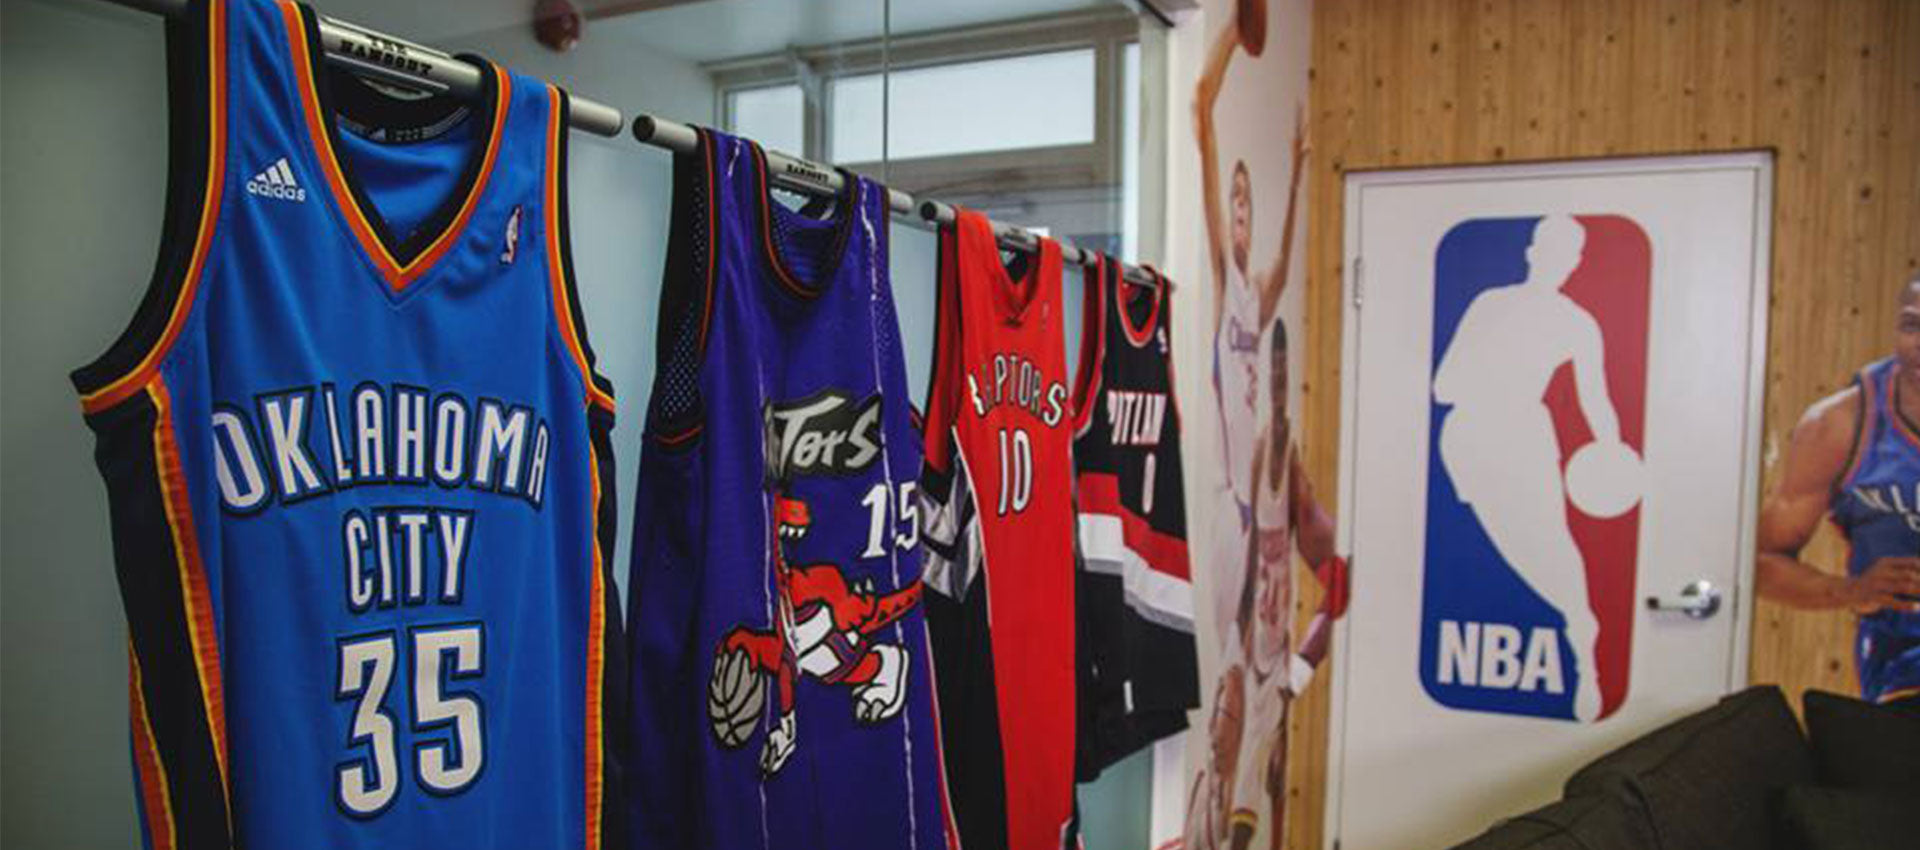 how to hang basketball jerseys on wall